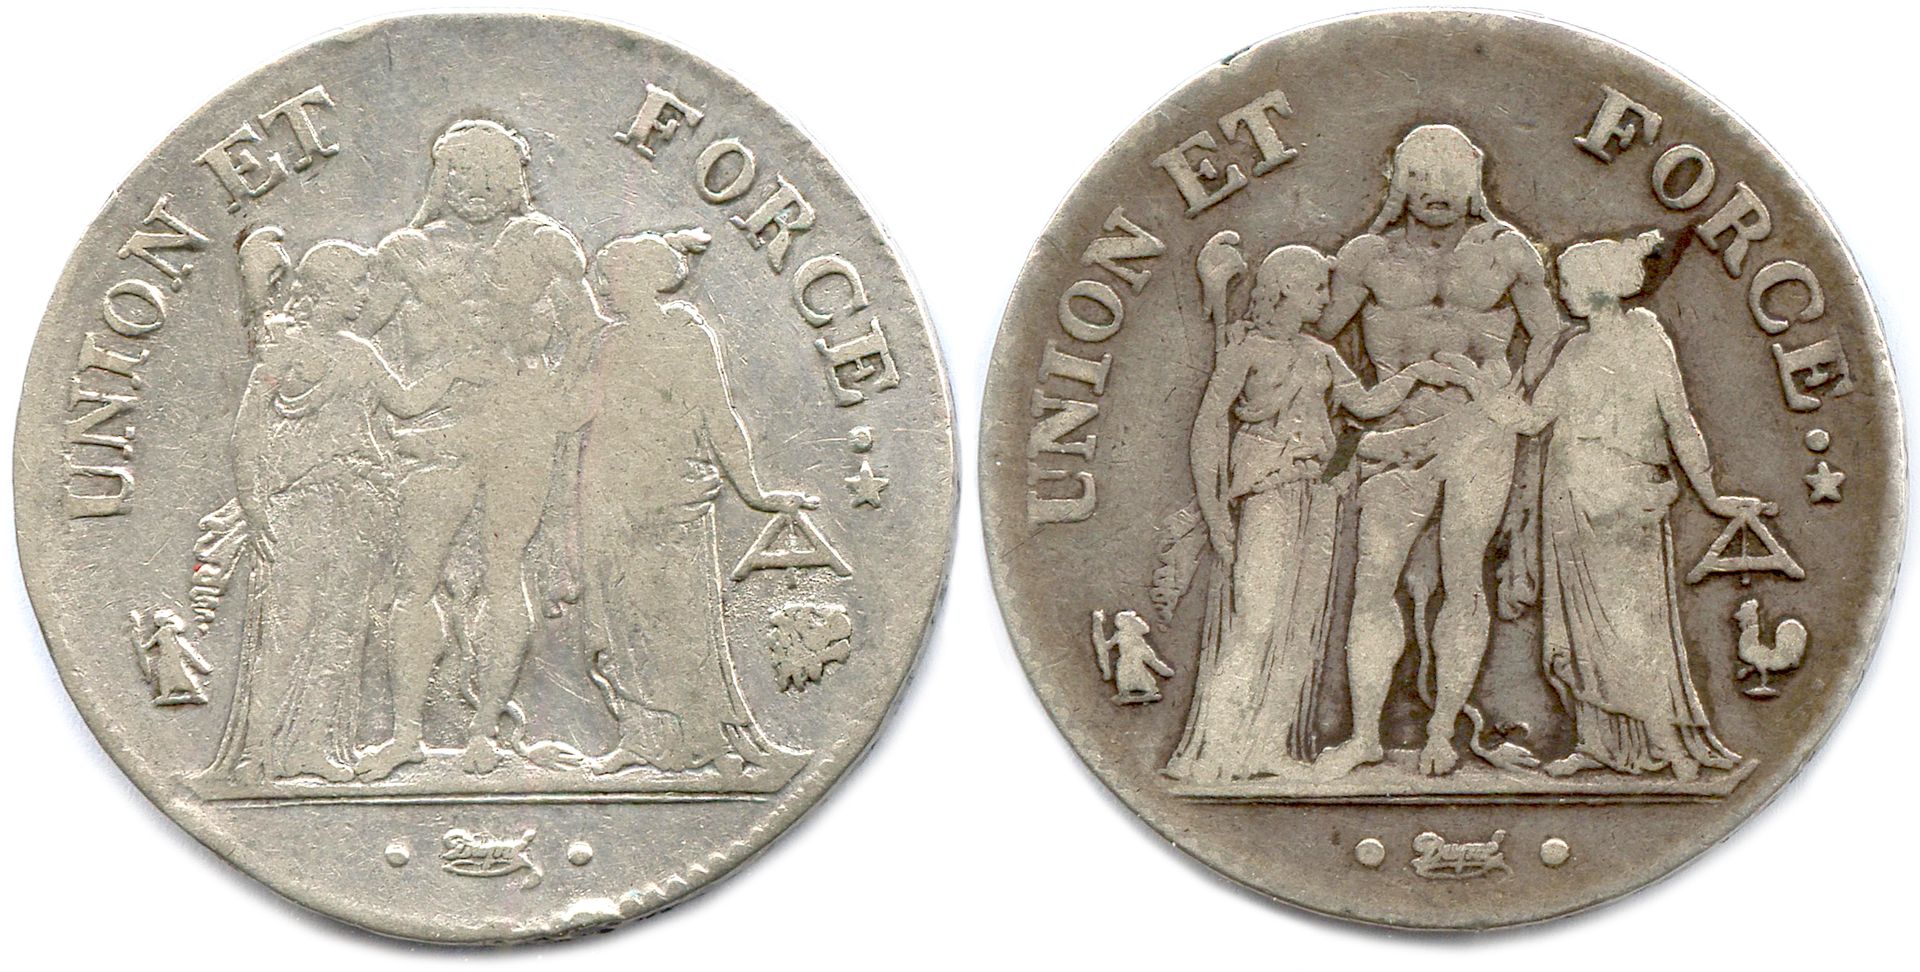 Null DIRECTOIRE 23 octobre 1795 - 10 novembre 1799

Deux monnaies : 5 Francs Her&hellip;